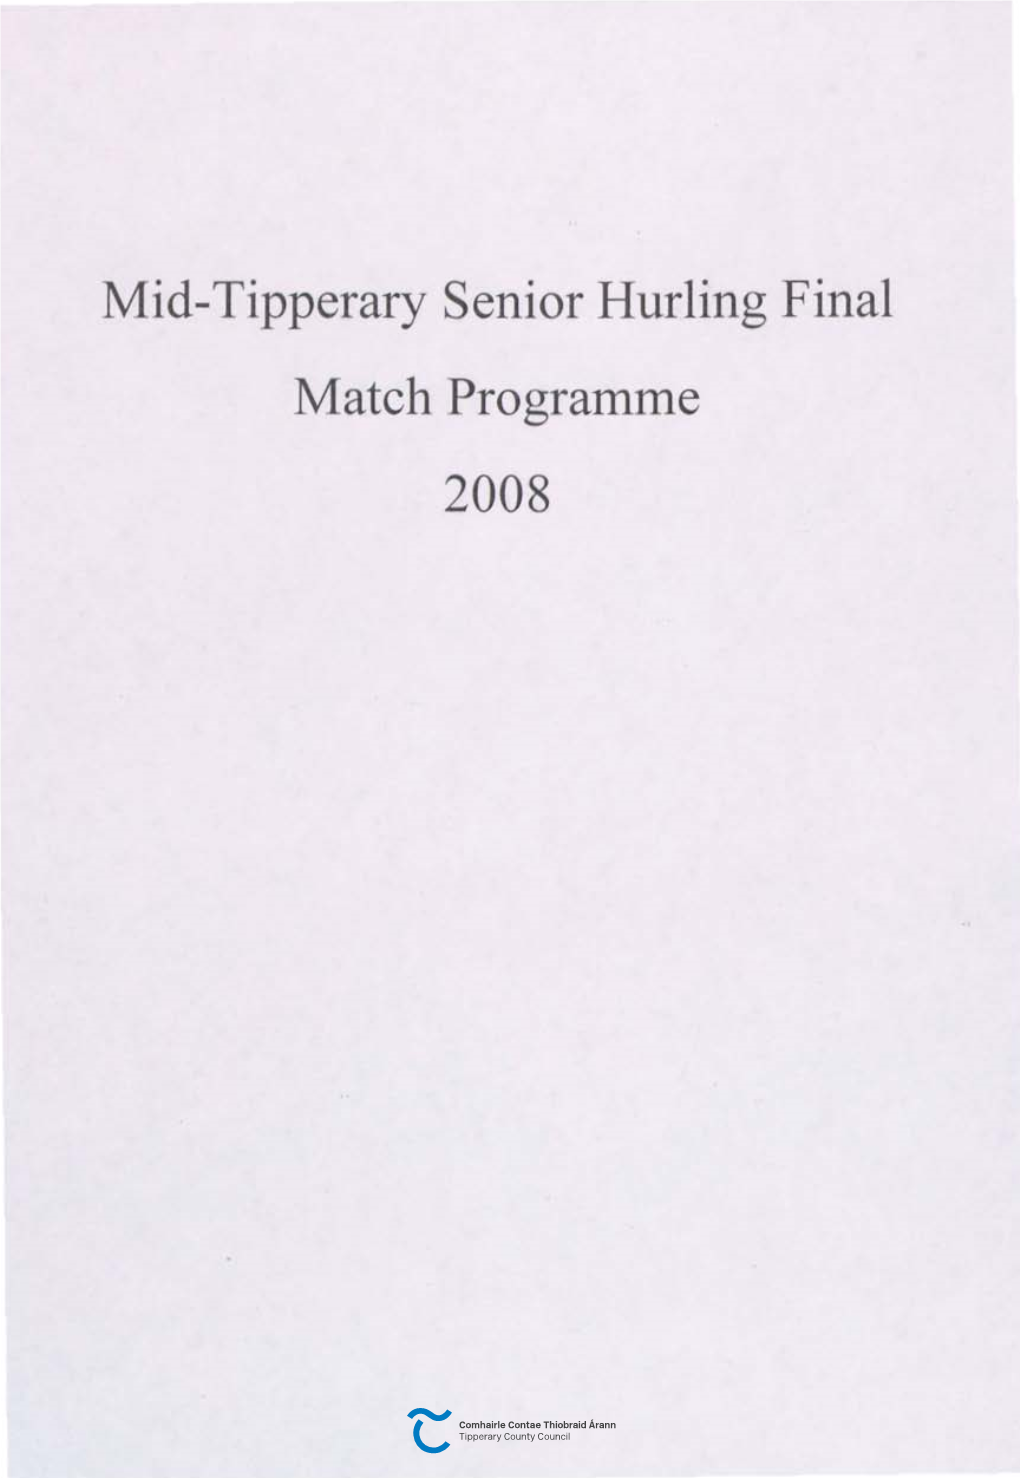 Mid-Tipperary Senior Hurling Final Match Programme 2008 Maclochlain Road Markings Mid-Tipperary Senior Hurl Ing Final 'Hurlis Sflllds " -I Eh